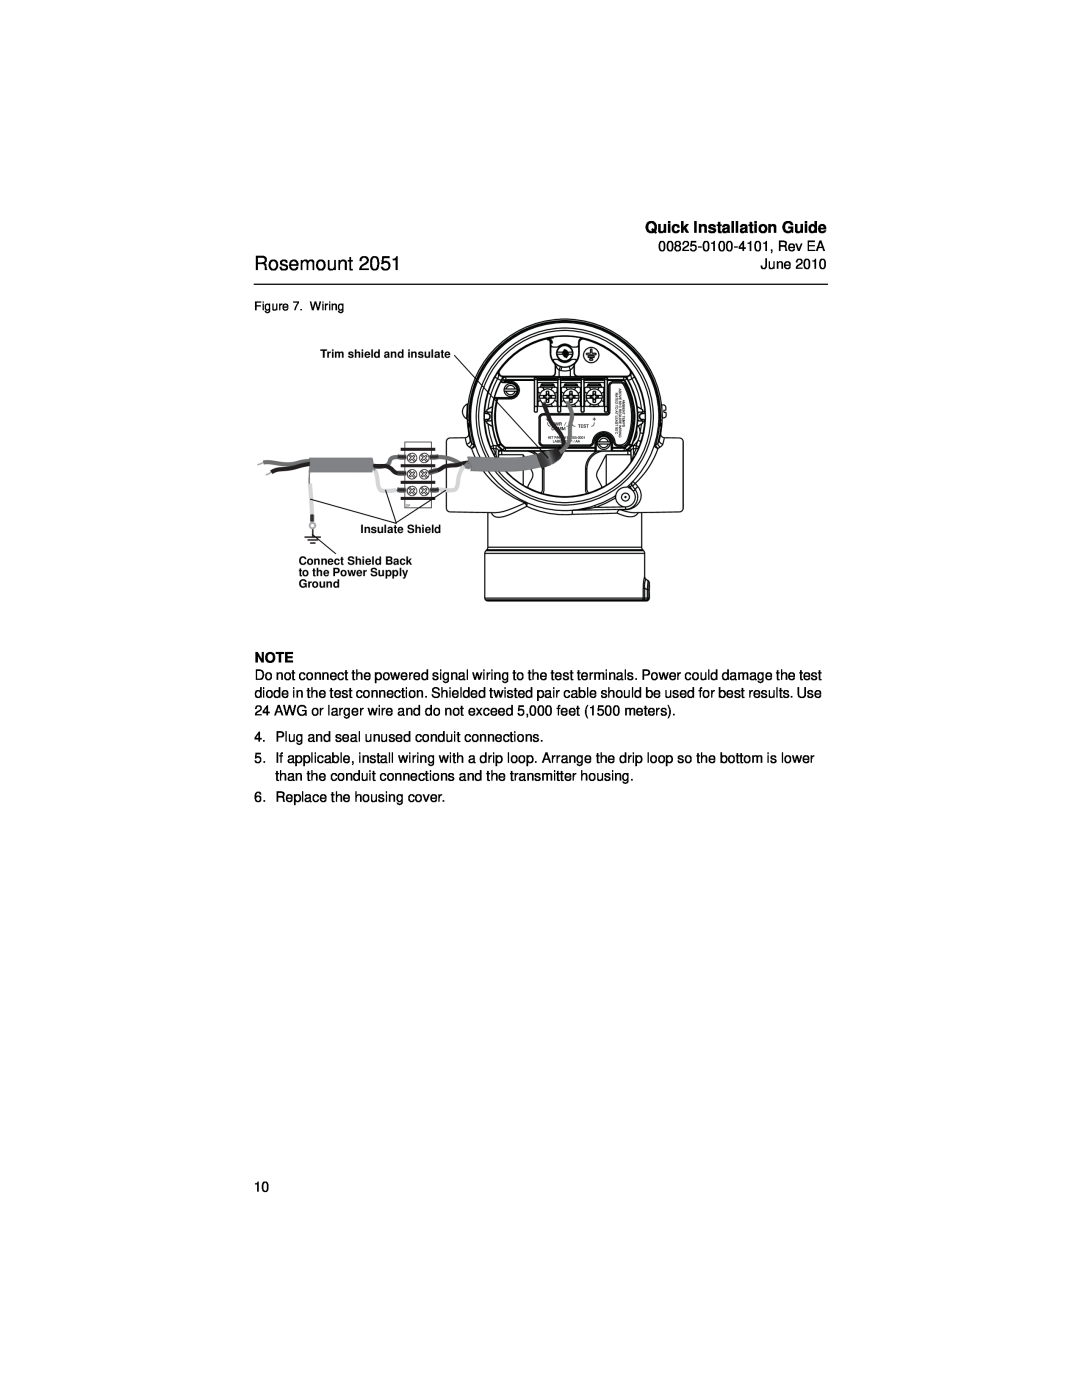 Emerson Process Management 2051CF manual Rosemount, Quick Installation Guide, 00825-0100-4101,Rev EA June 